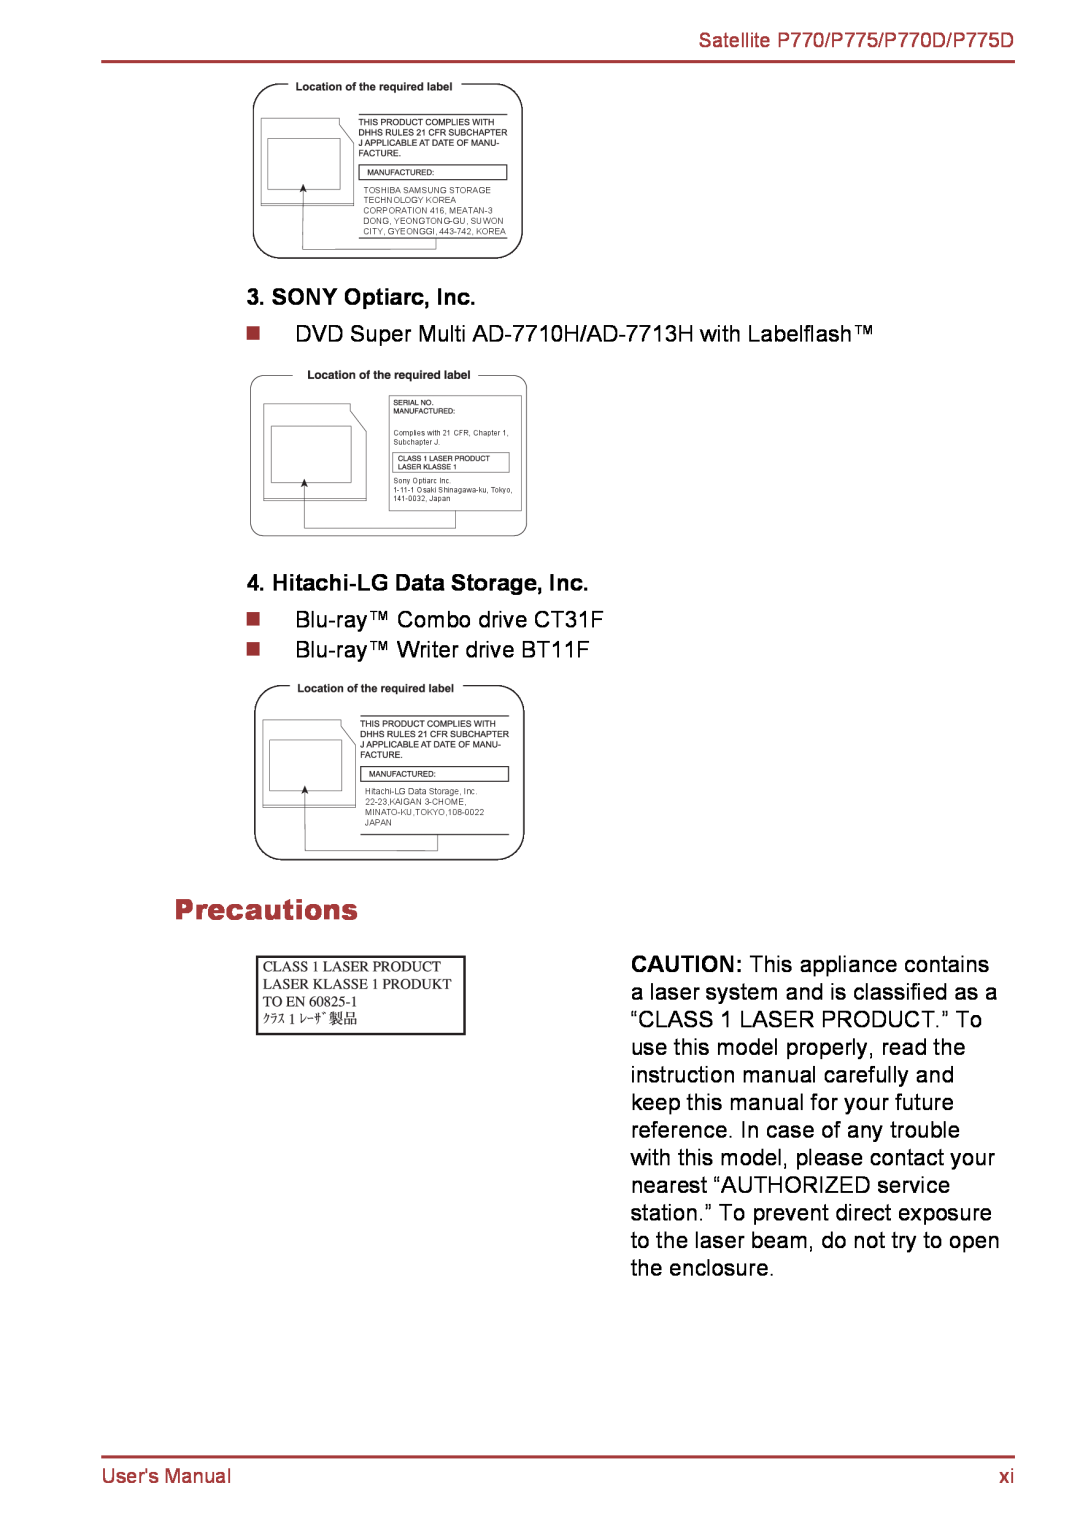 Toshiba P770 user manual Precautions, SONY Optiarc, Inc, Hitachi-LG Data Storage, Inc 